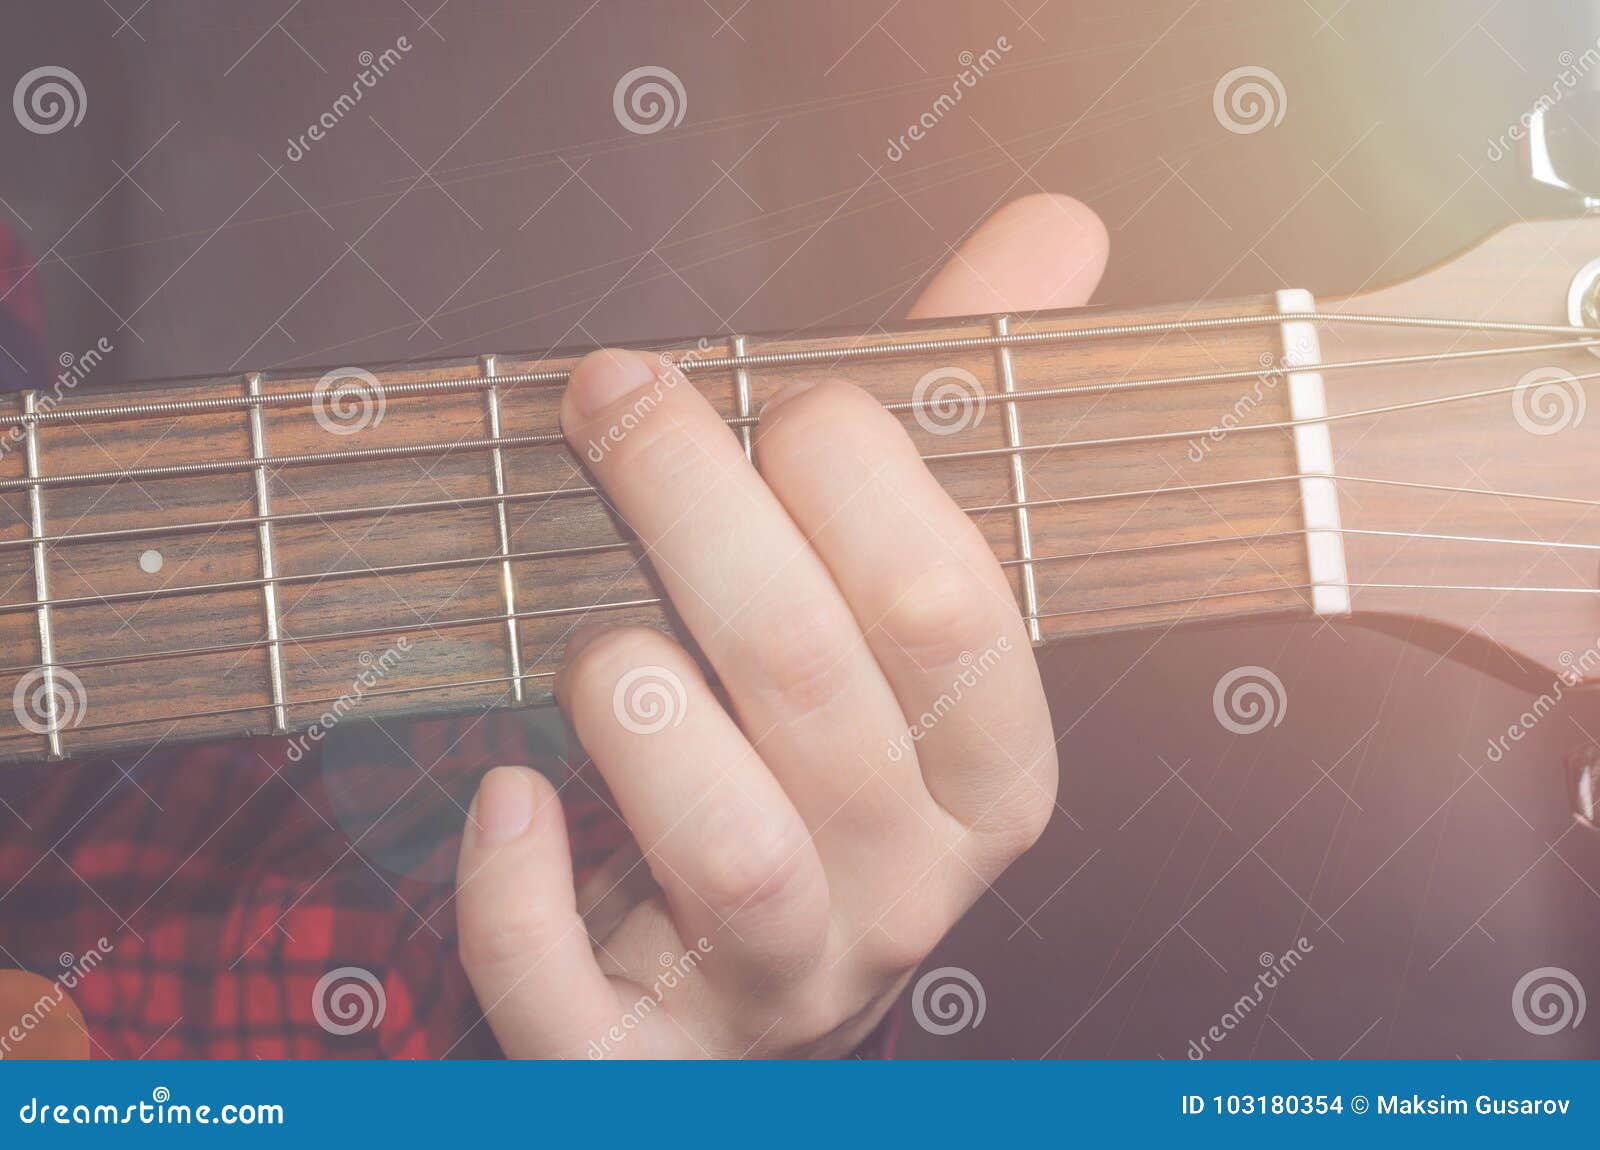 musician playing accord